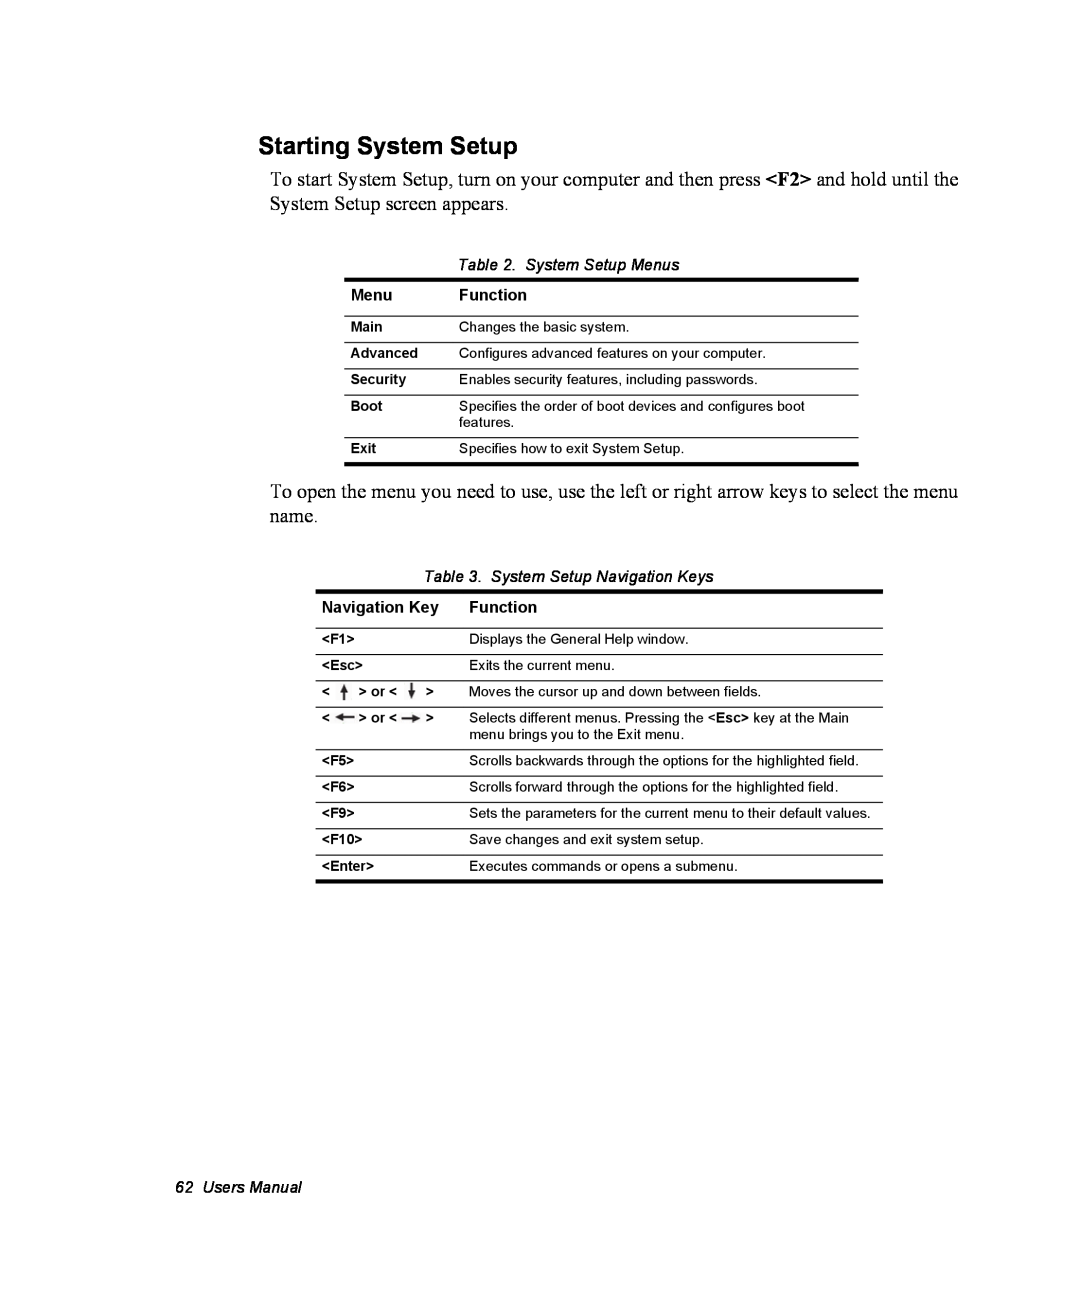 Samsung NM40PRCV02/SEF manual Starting System Setup, System Setup Menus, System Setup Navigation Keys, Users Manual 